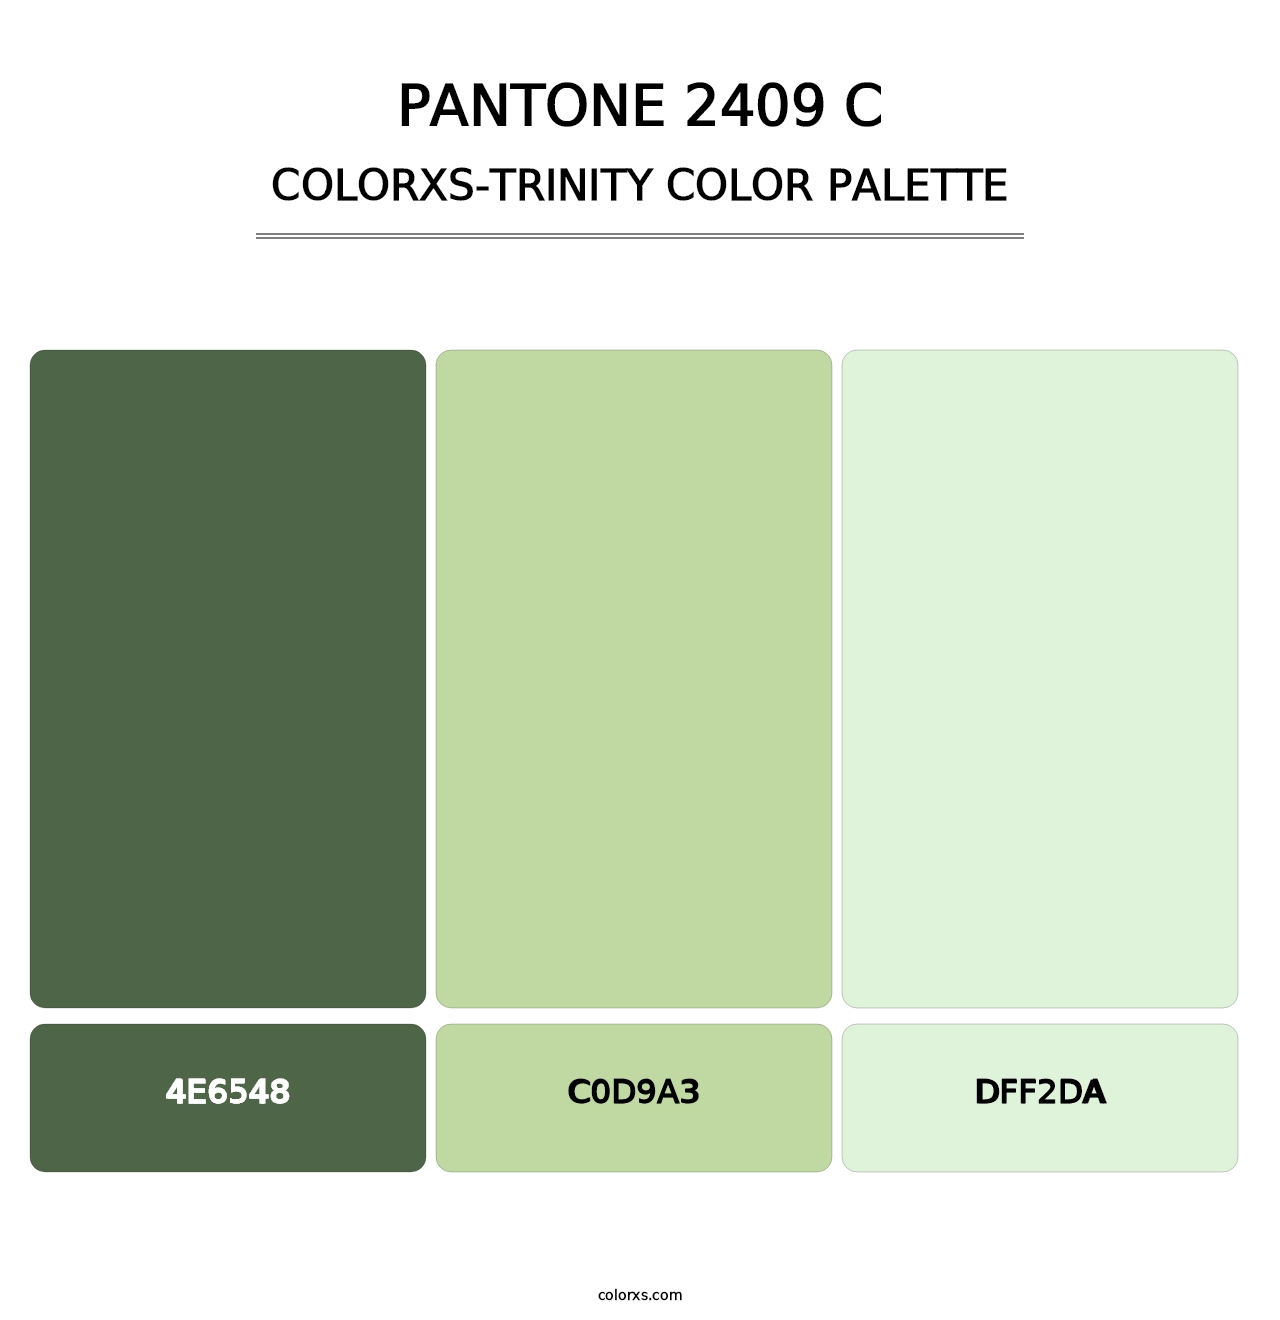 PANTONE 2409 C - Colorxs Trinity Palette